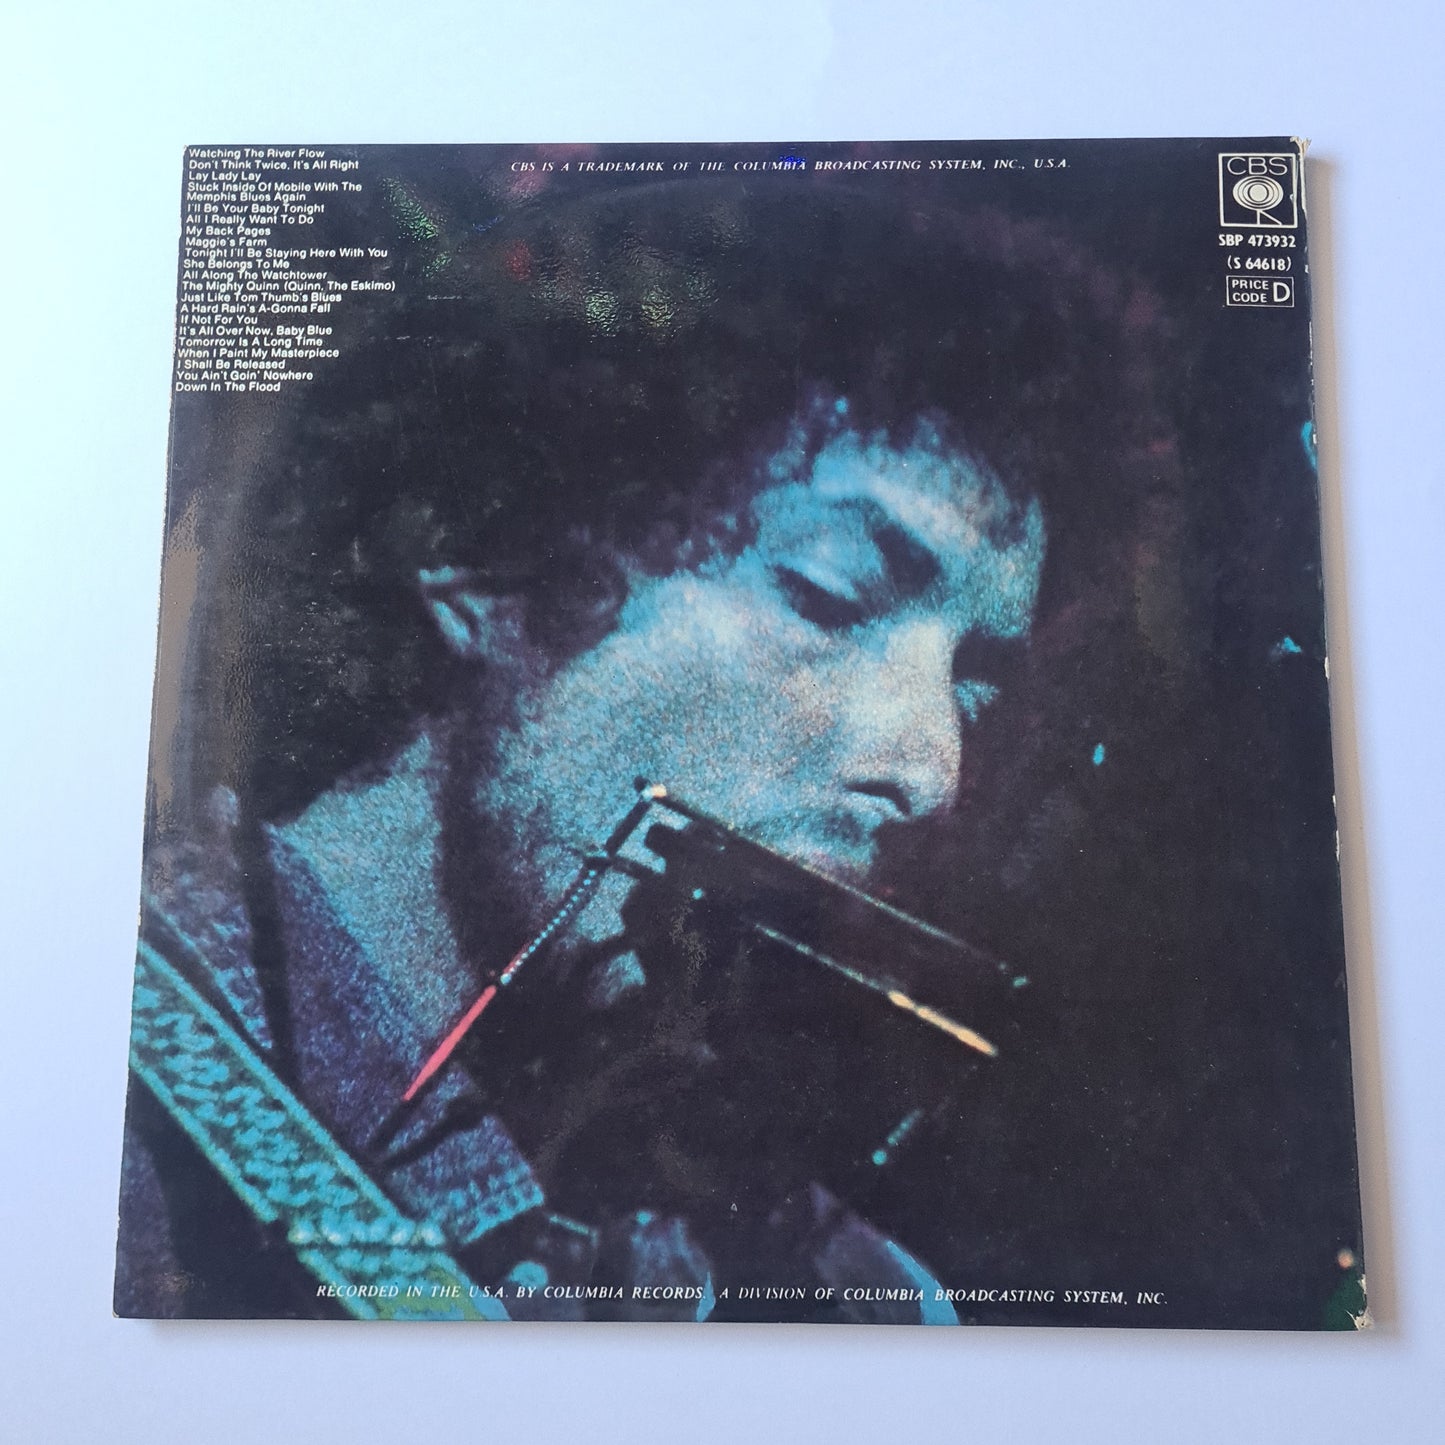 Bob Dylan – Bob Dylan's Greatest Hits Vol 2 (2LP) - 1967 - Vinyl Record